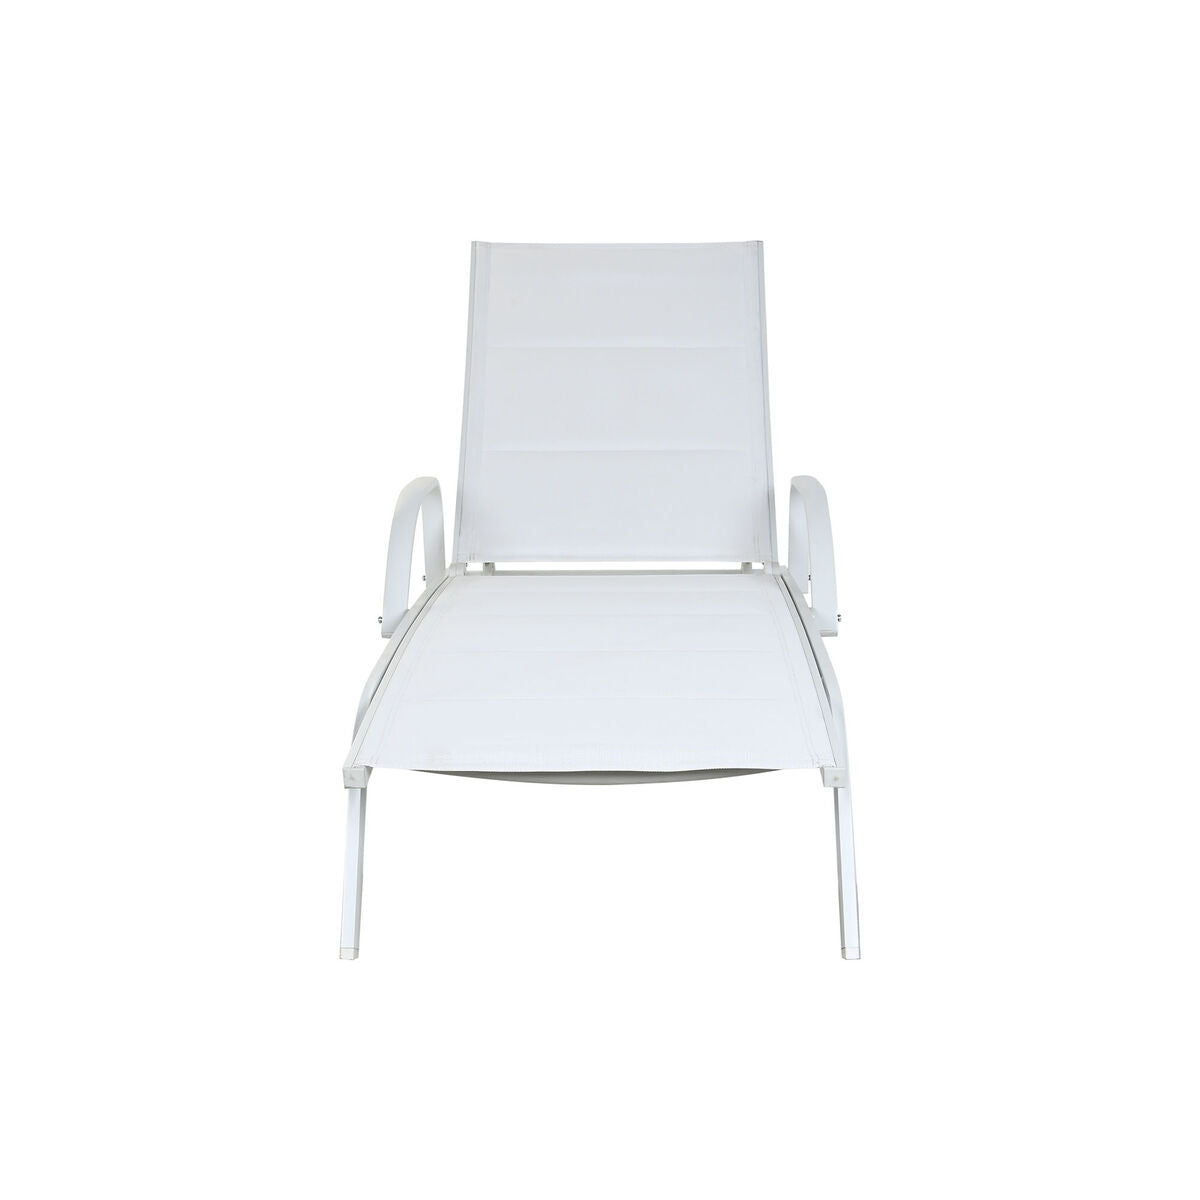 Chaise longue Design Moderne Home Decor Aluminium Blanc (193 x 70 x 30 cm)